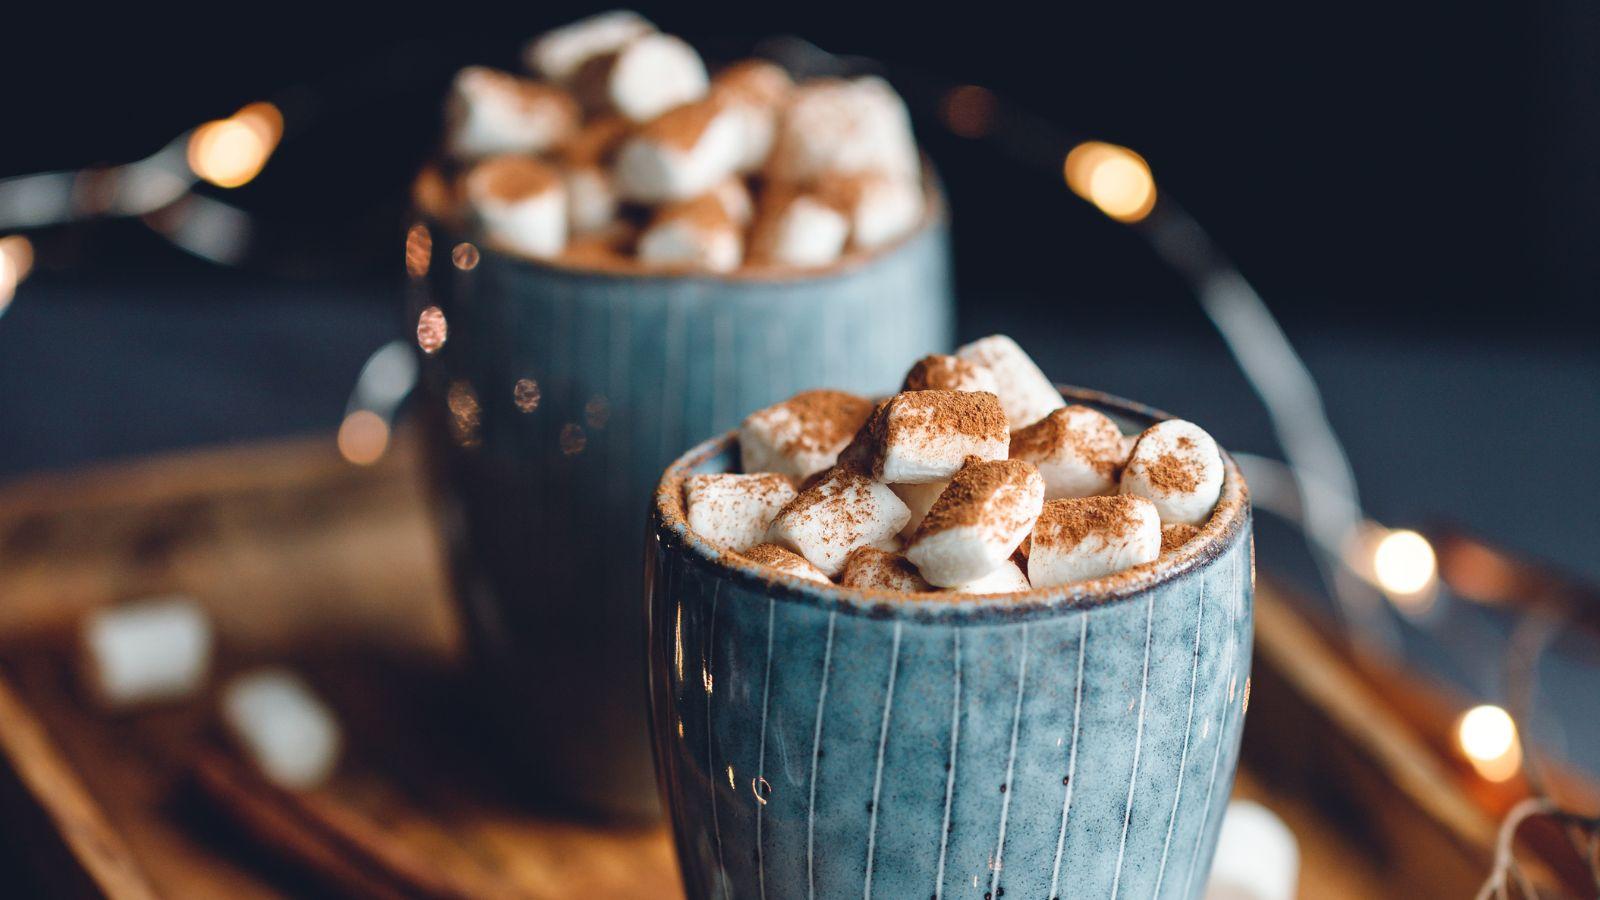 Image of two mugs of hot chocolate